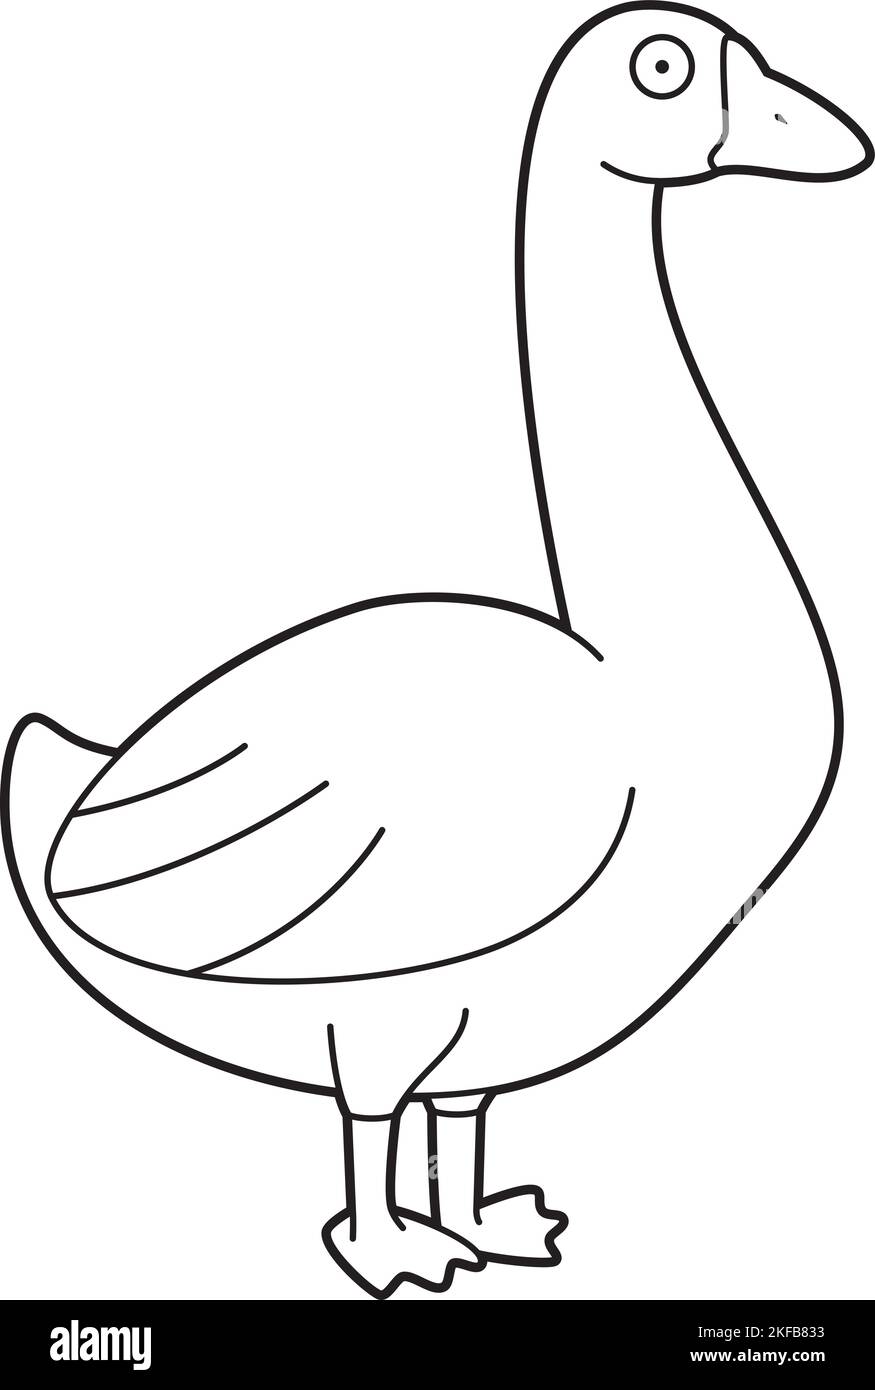 Easy coloring cartoon vector illustration of a goose Stock Vector